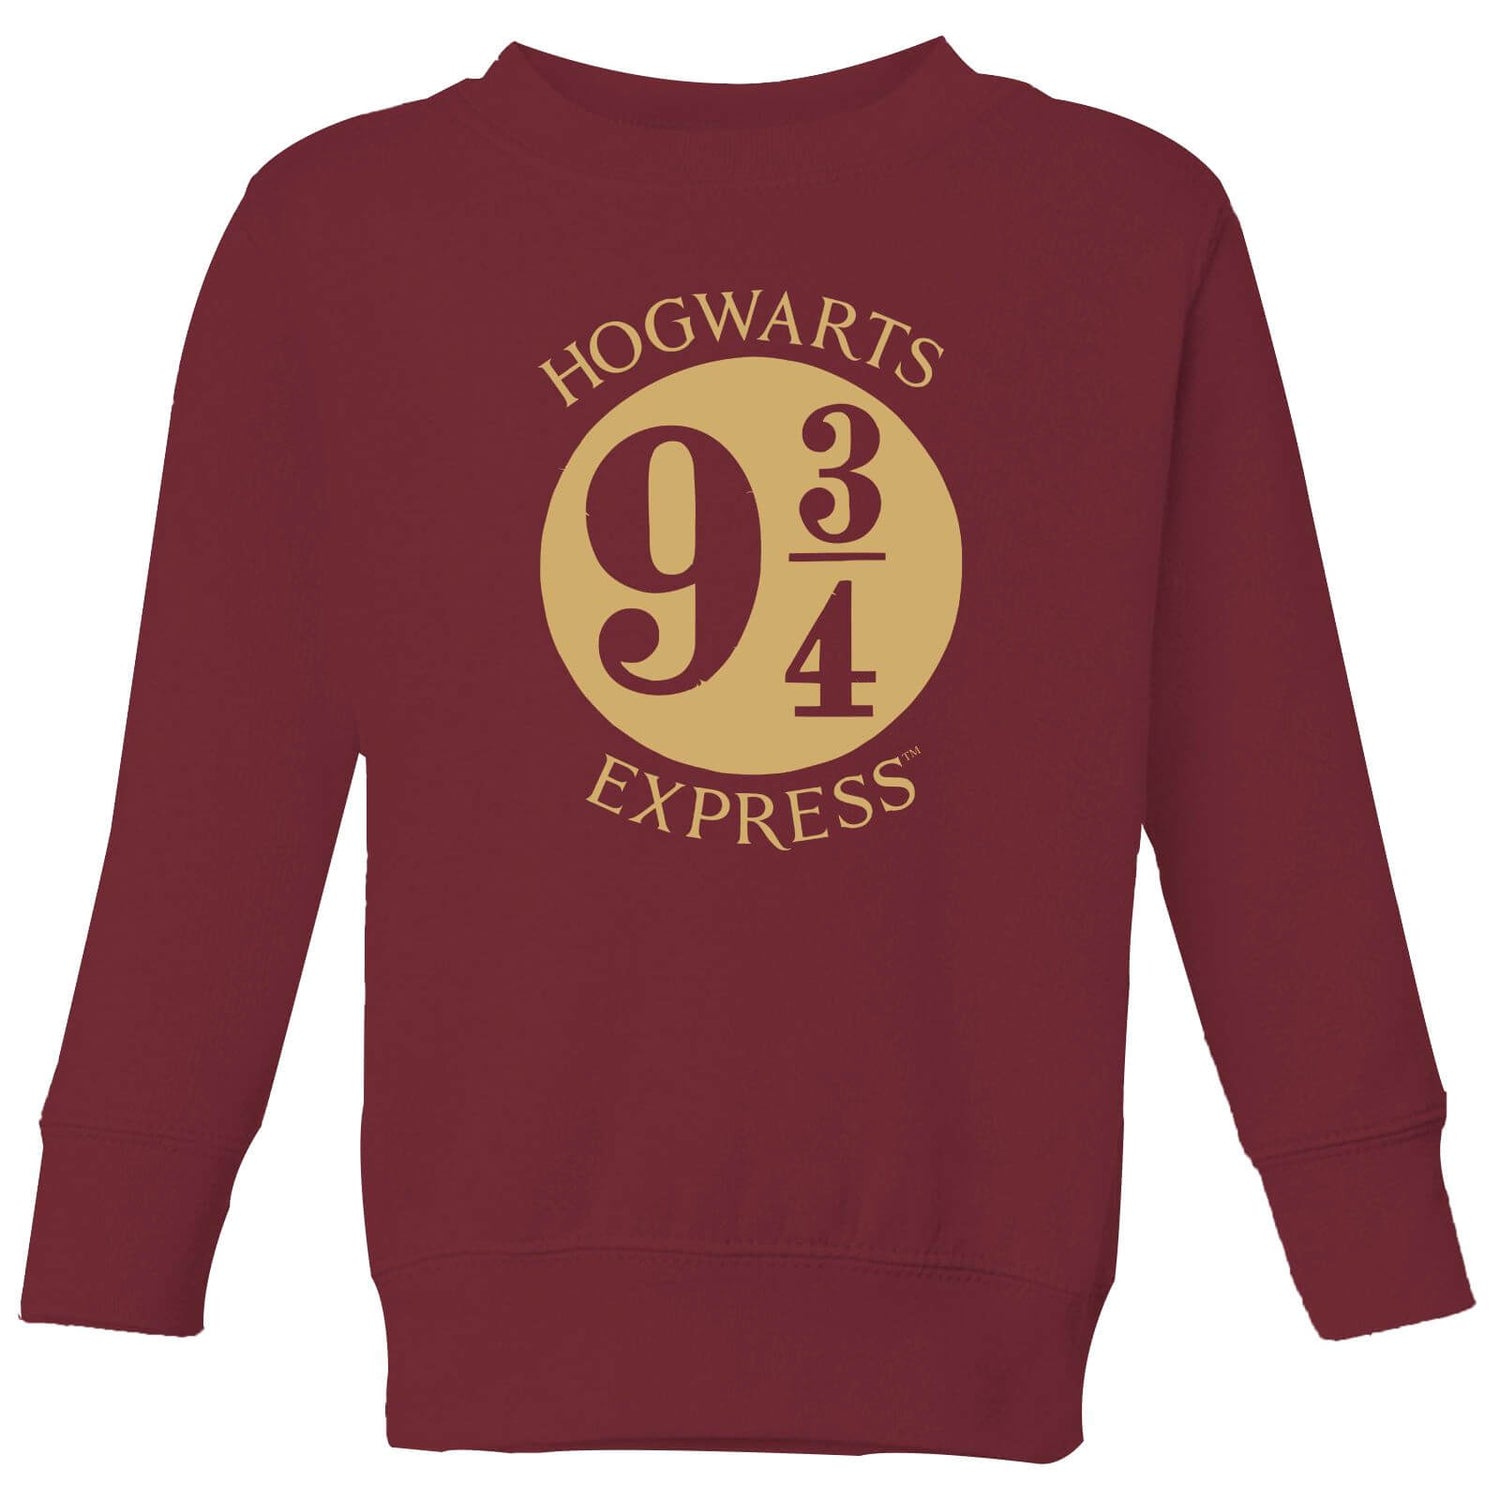 Harry Potter Platform Kids' Sweatshirt - Burgundy